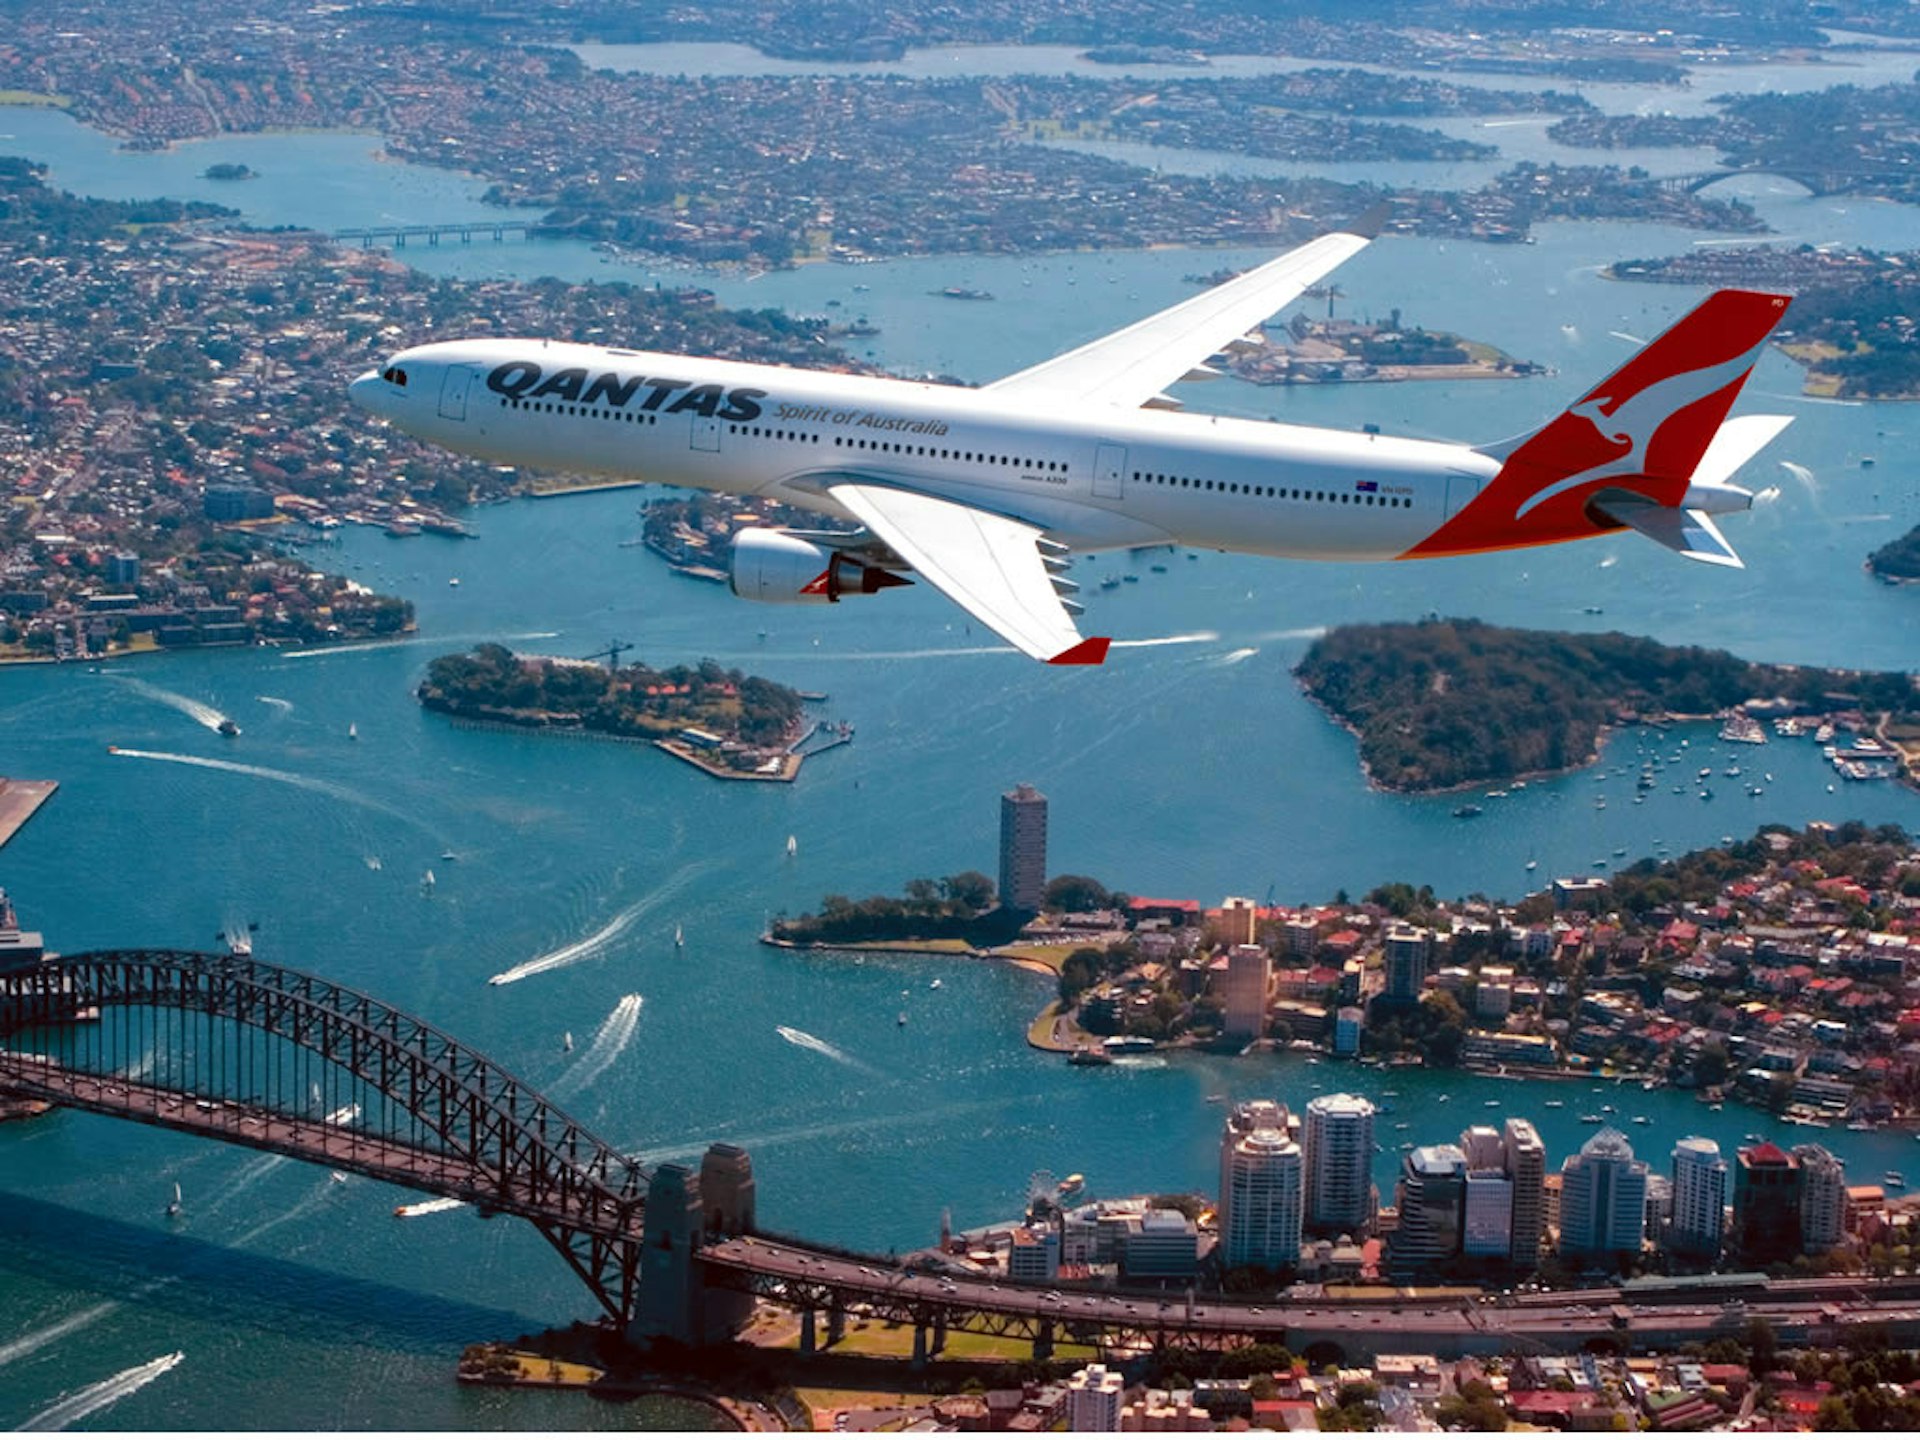 A Qantas plane flying over Sydney